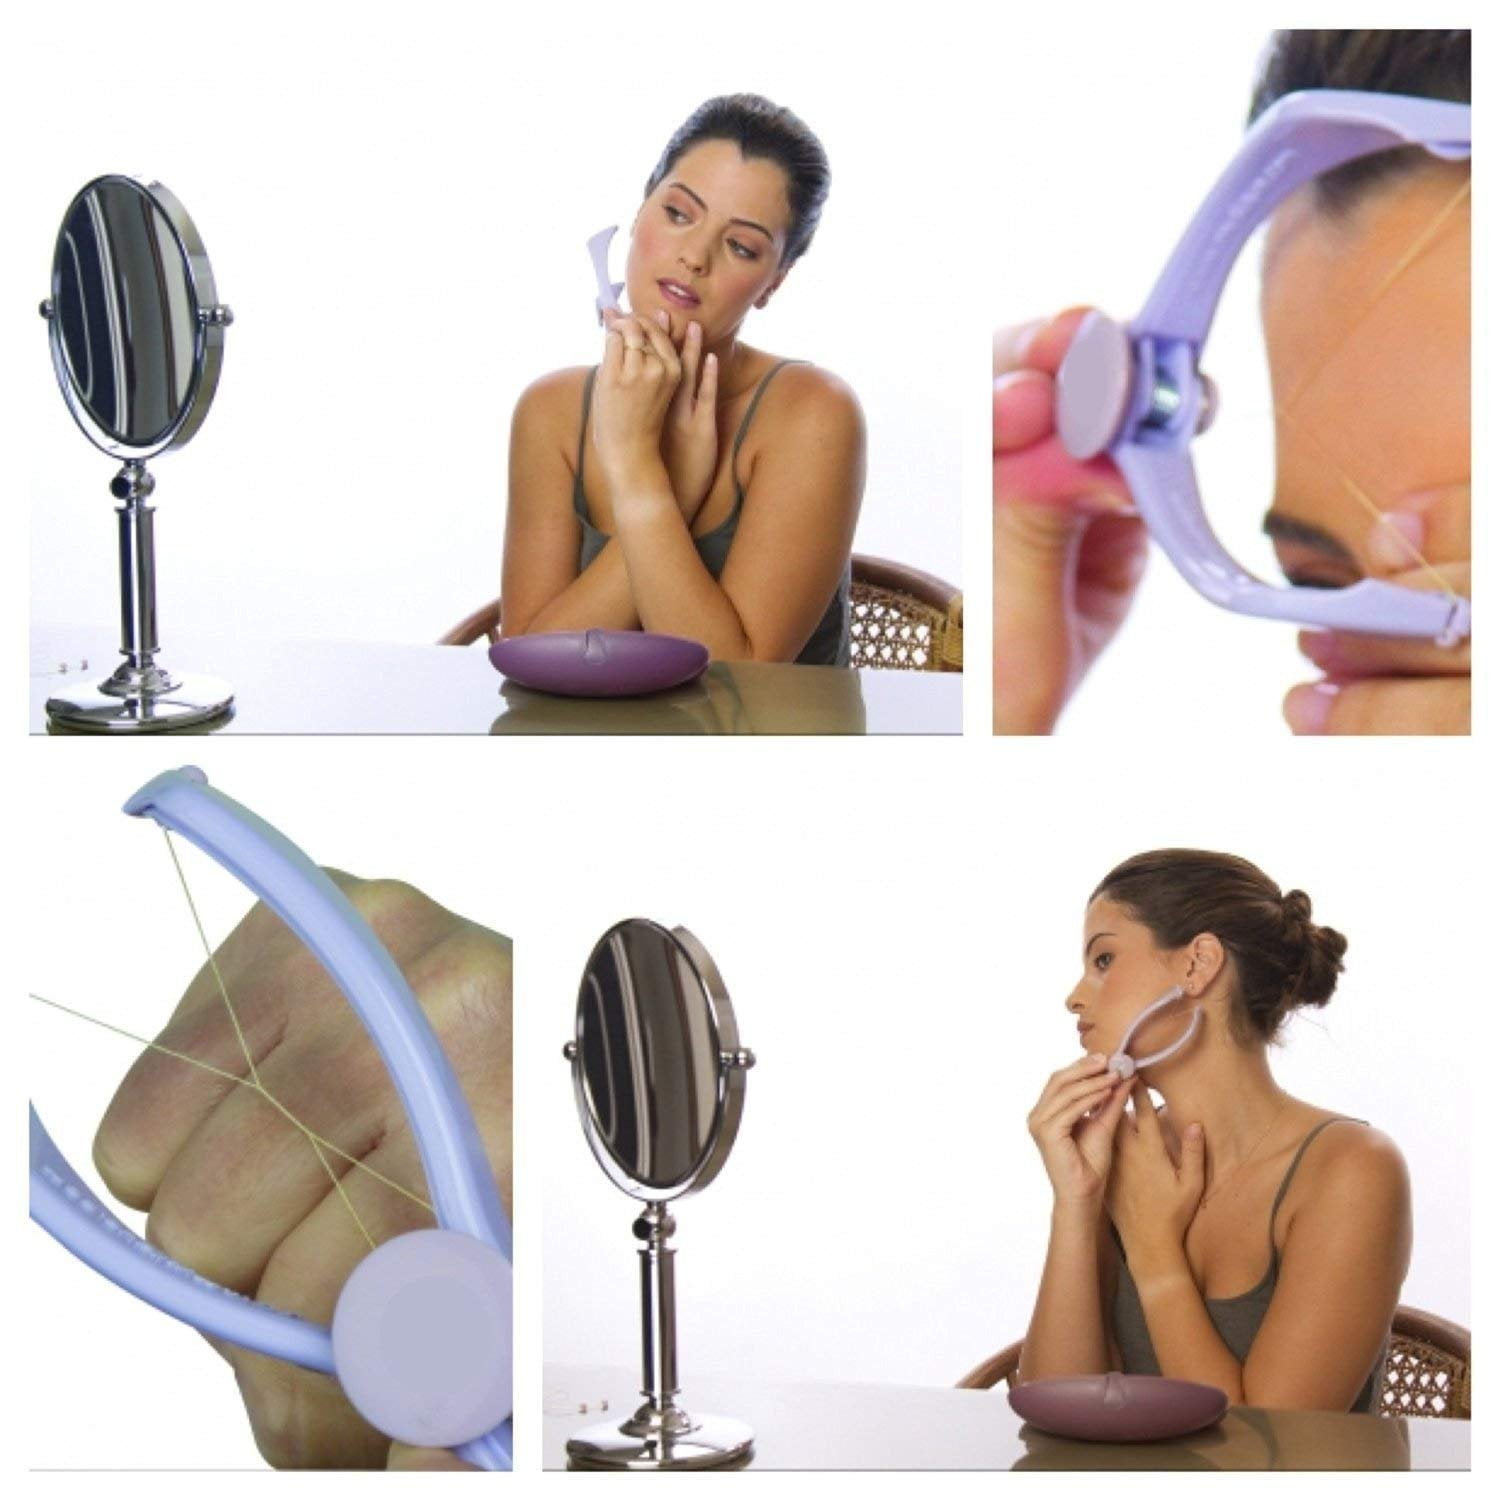 Slique Eyebrows Face & Body Hair Threading & Removal System - Parda